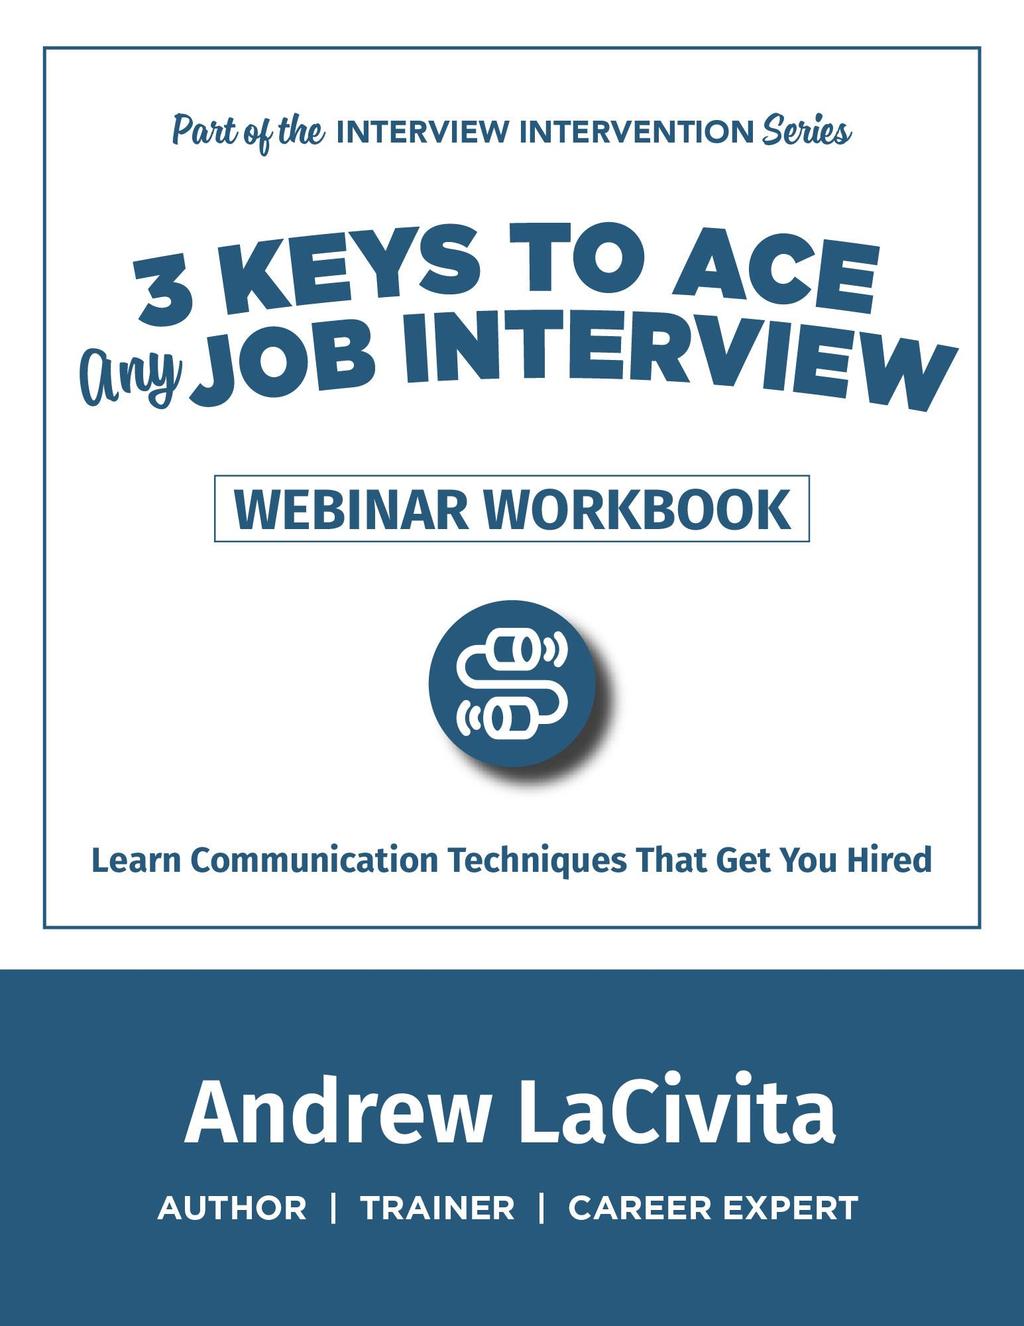 1 Andrew LaCivita s 3 Keys to